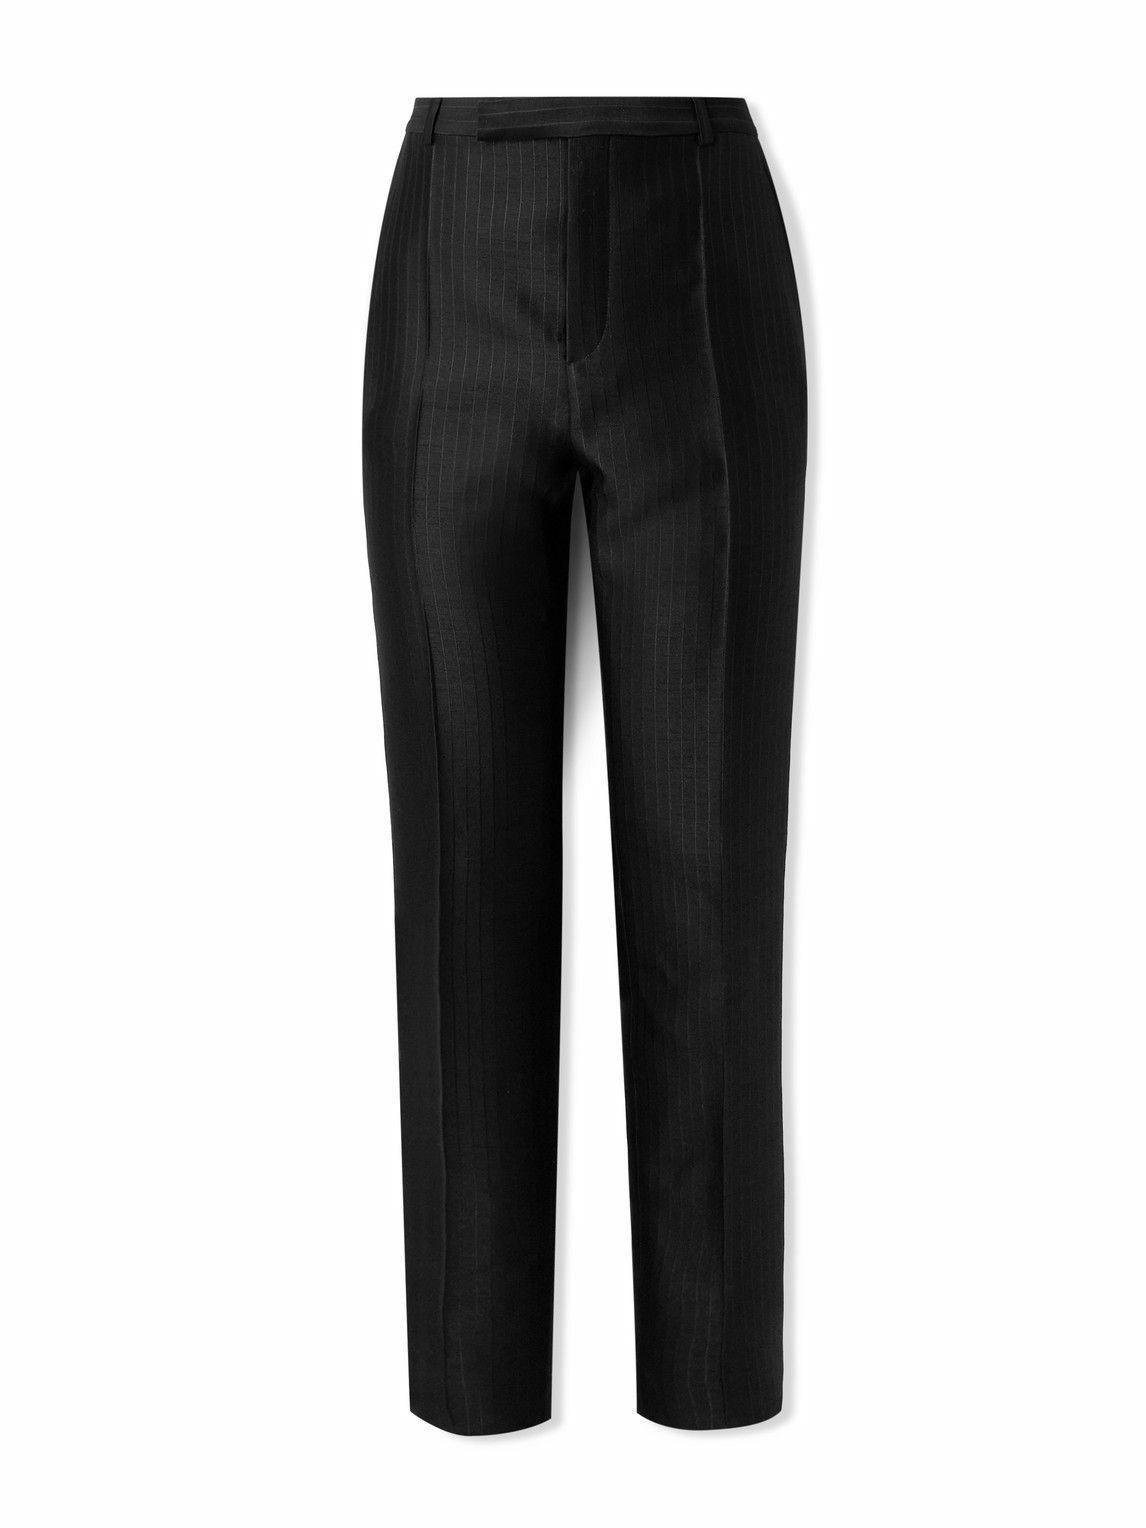 Straight-Cut Pants Black Wool and Silk